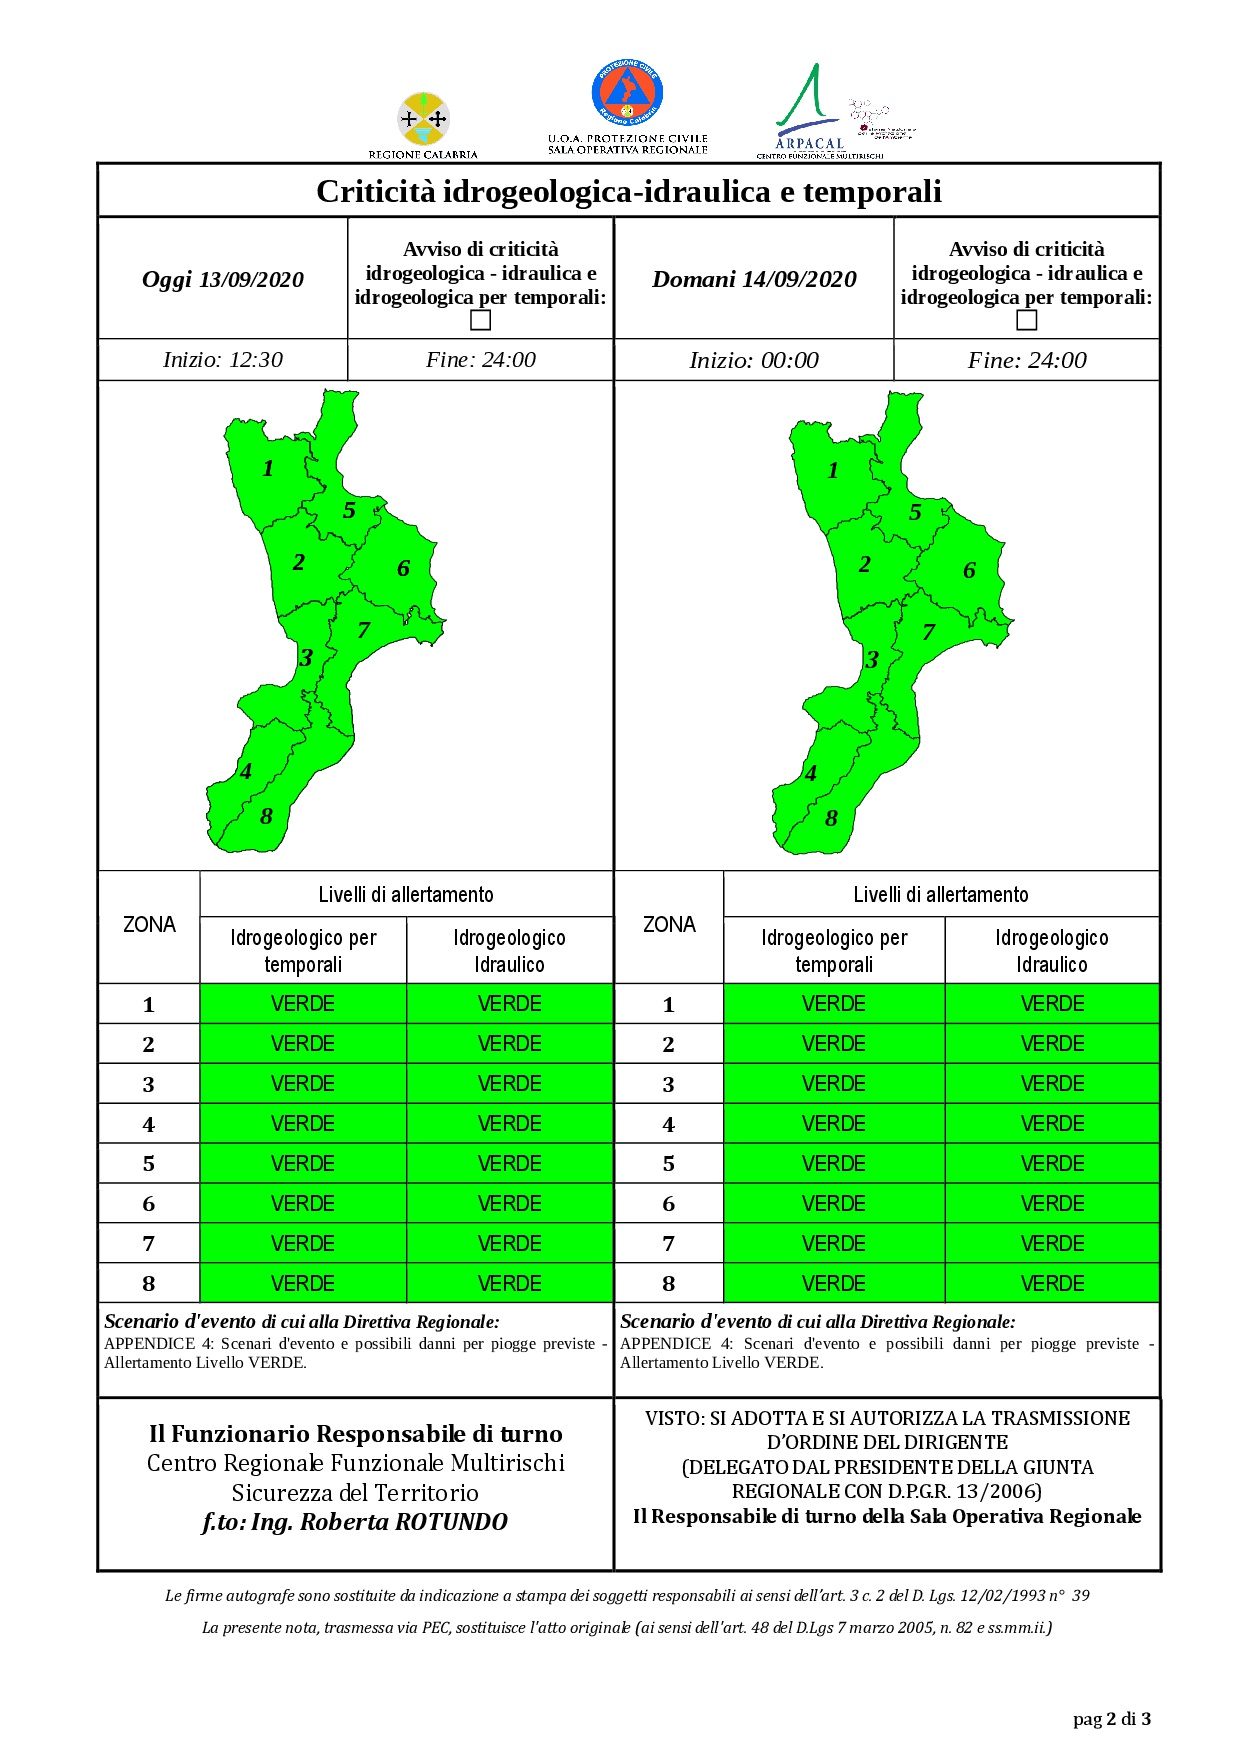 Criticità idrogeologica-idraulica e temporali in Calabria 13-09-2020